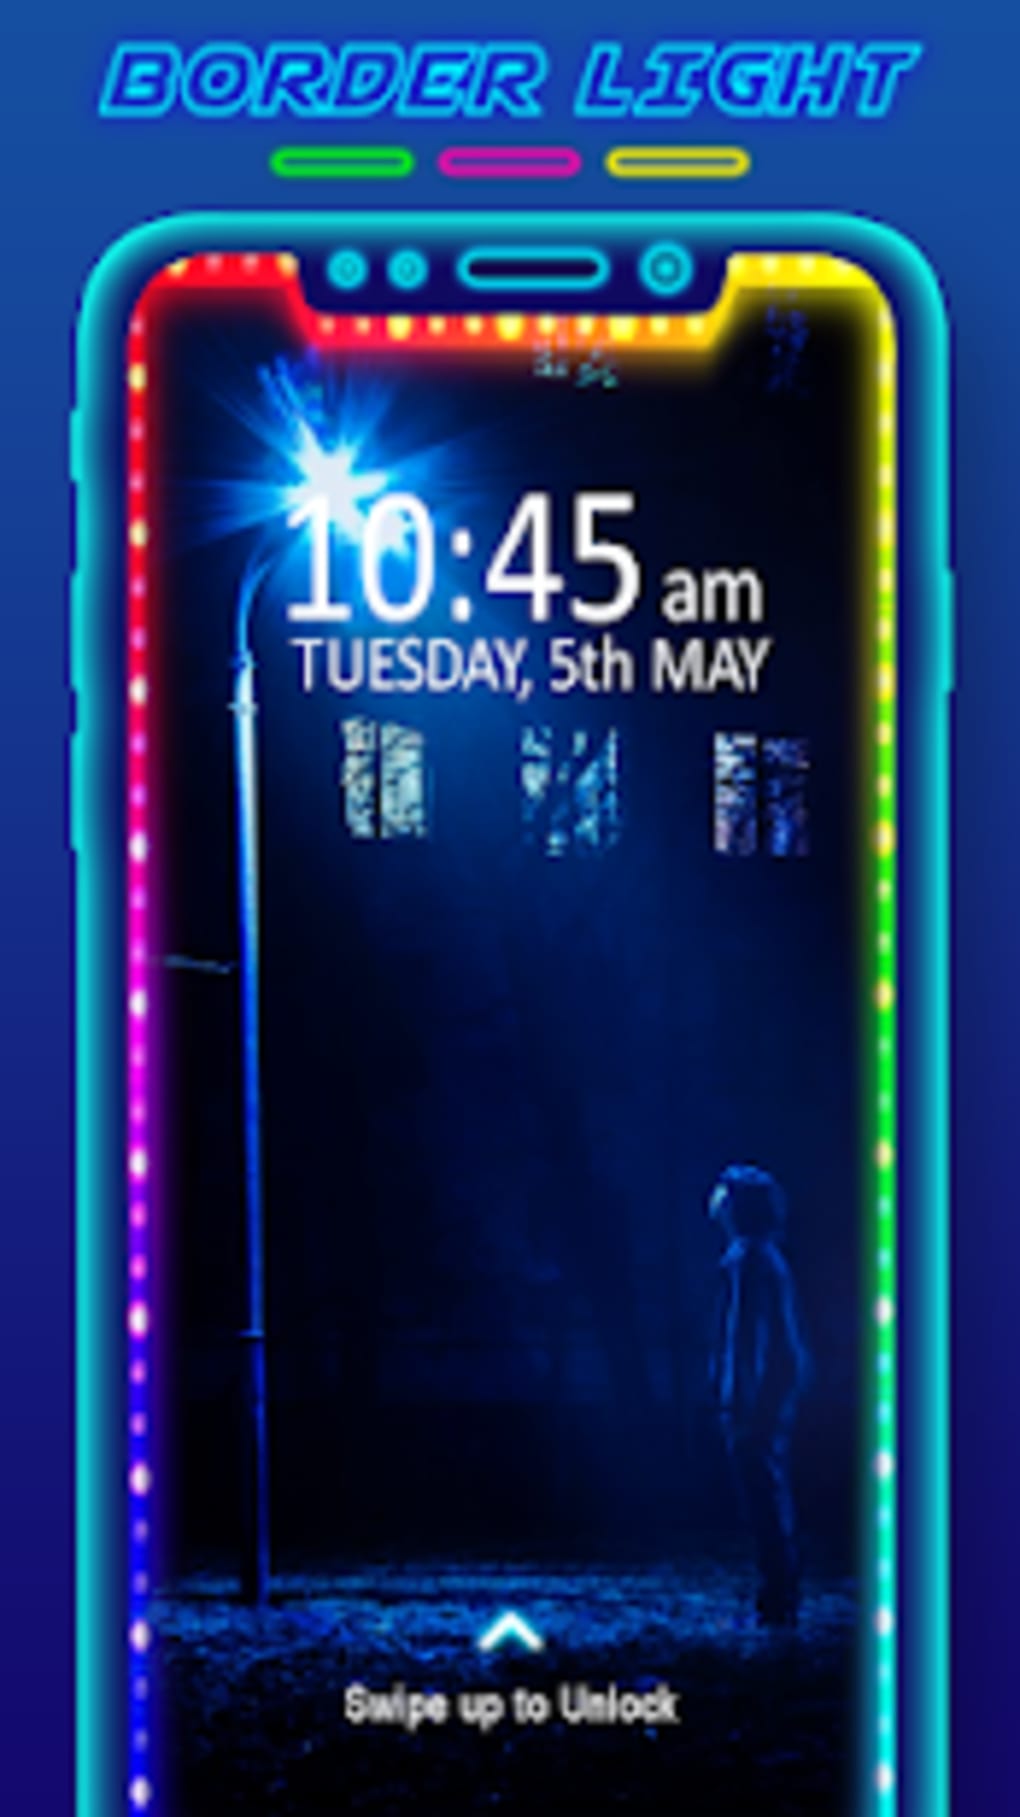 Led Color Live Wallpaper - Phone Blue Light Effect - HD Wallpaper 